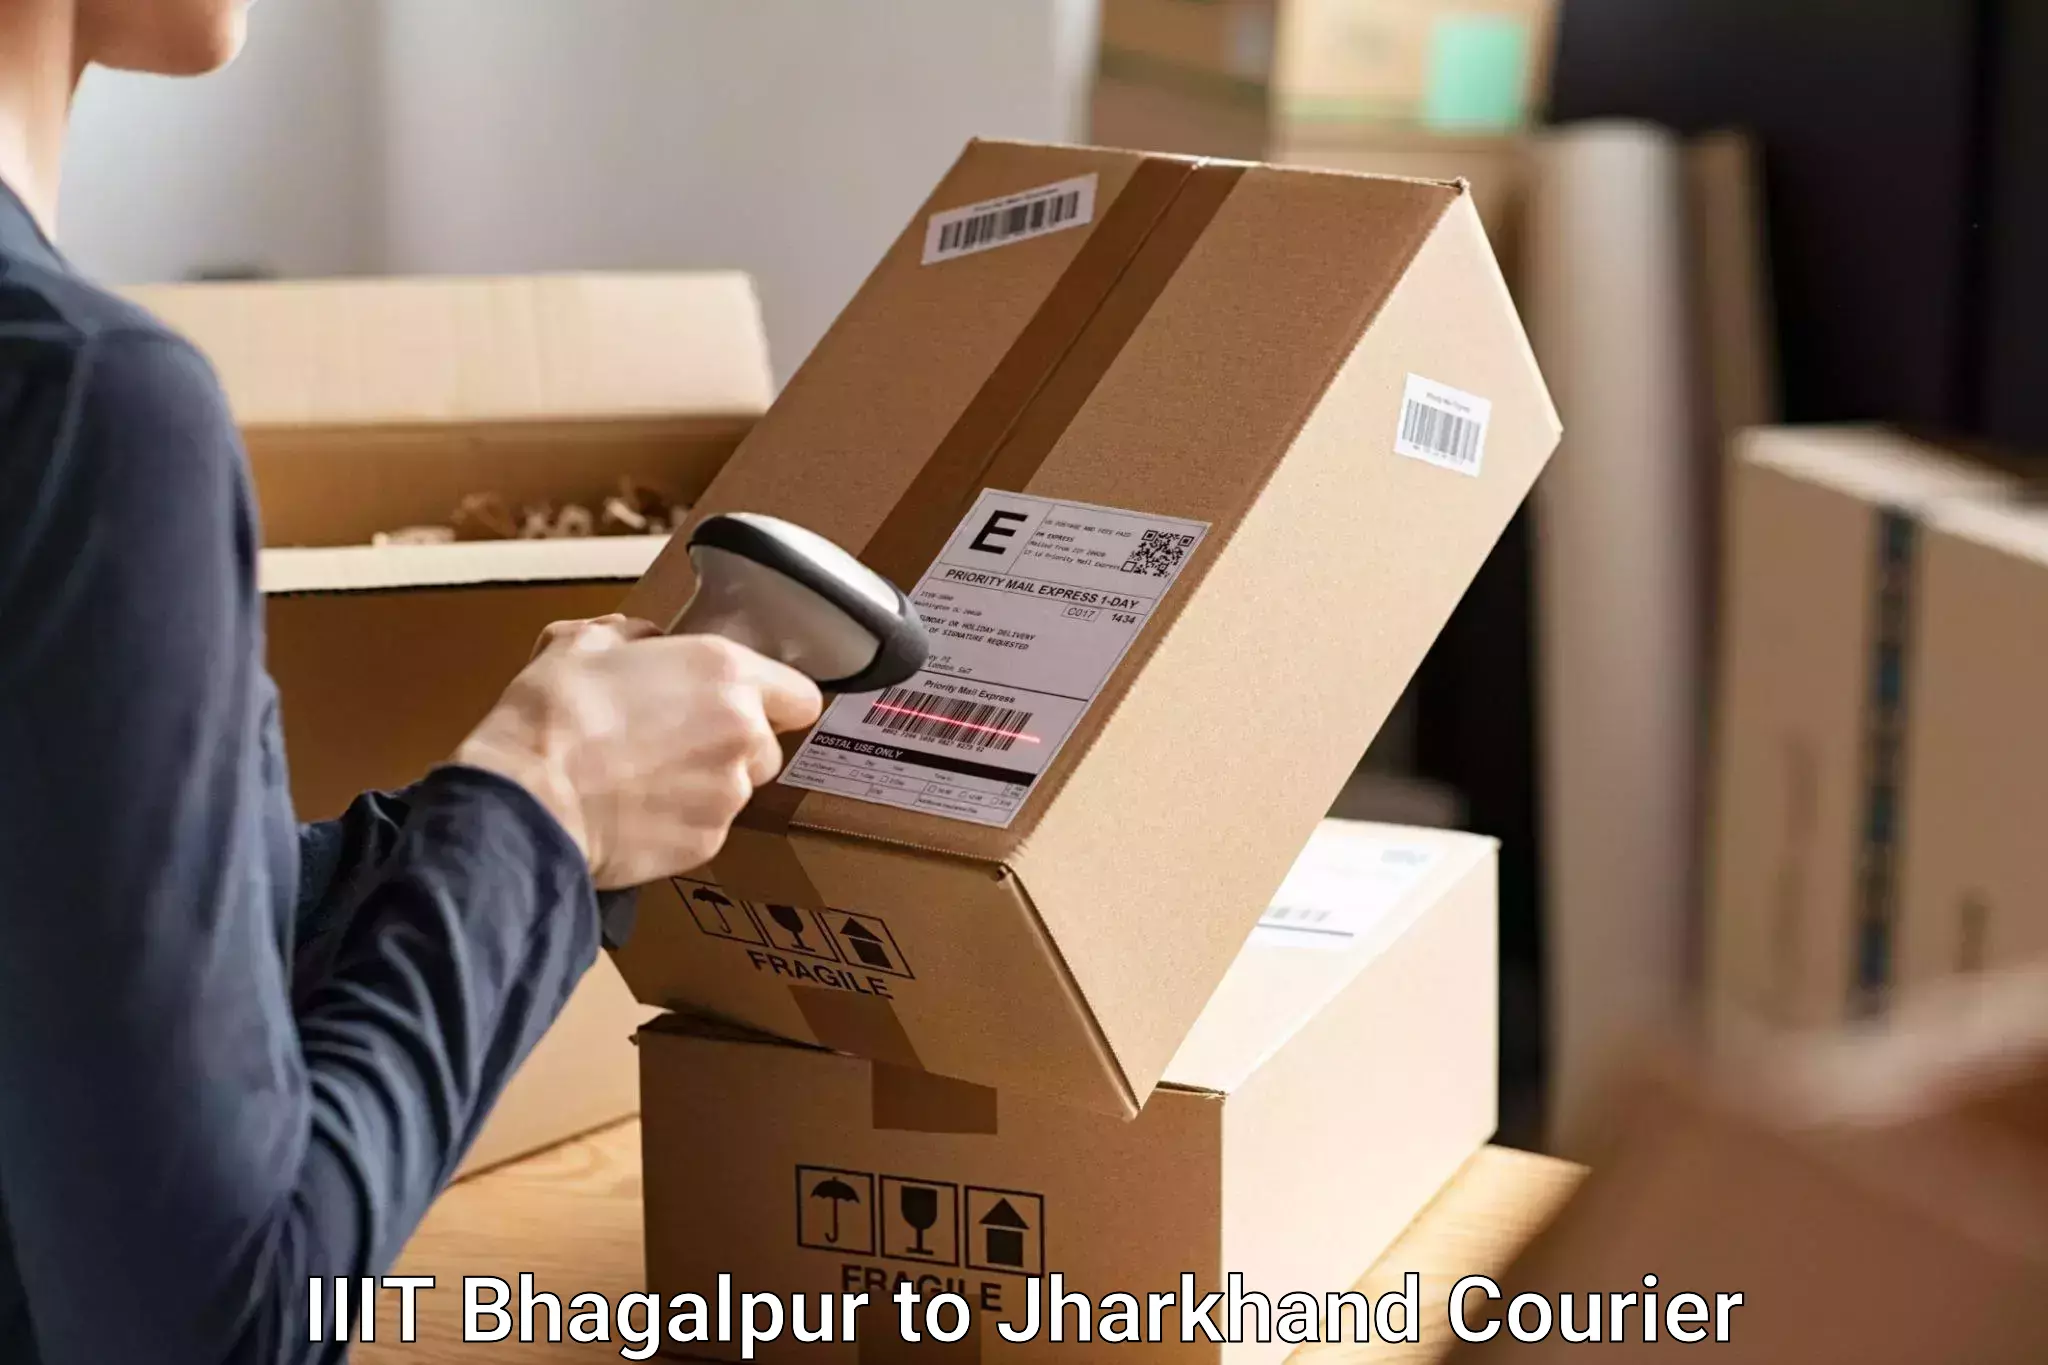 Baggage relocation service IIIT Bhagalpur to Shikaripara